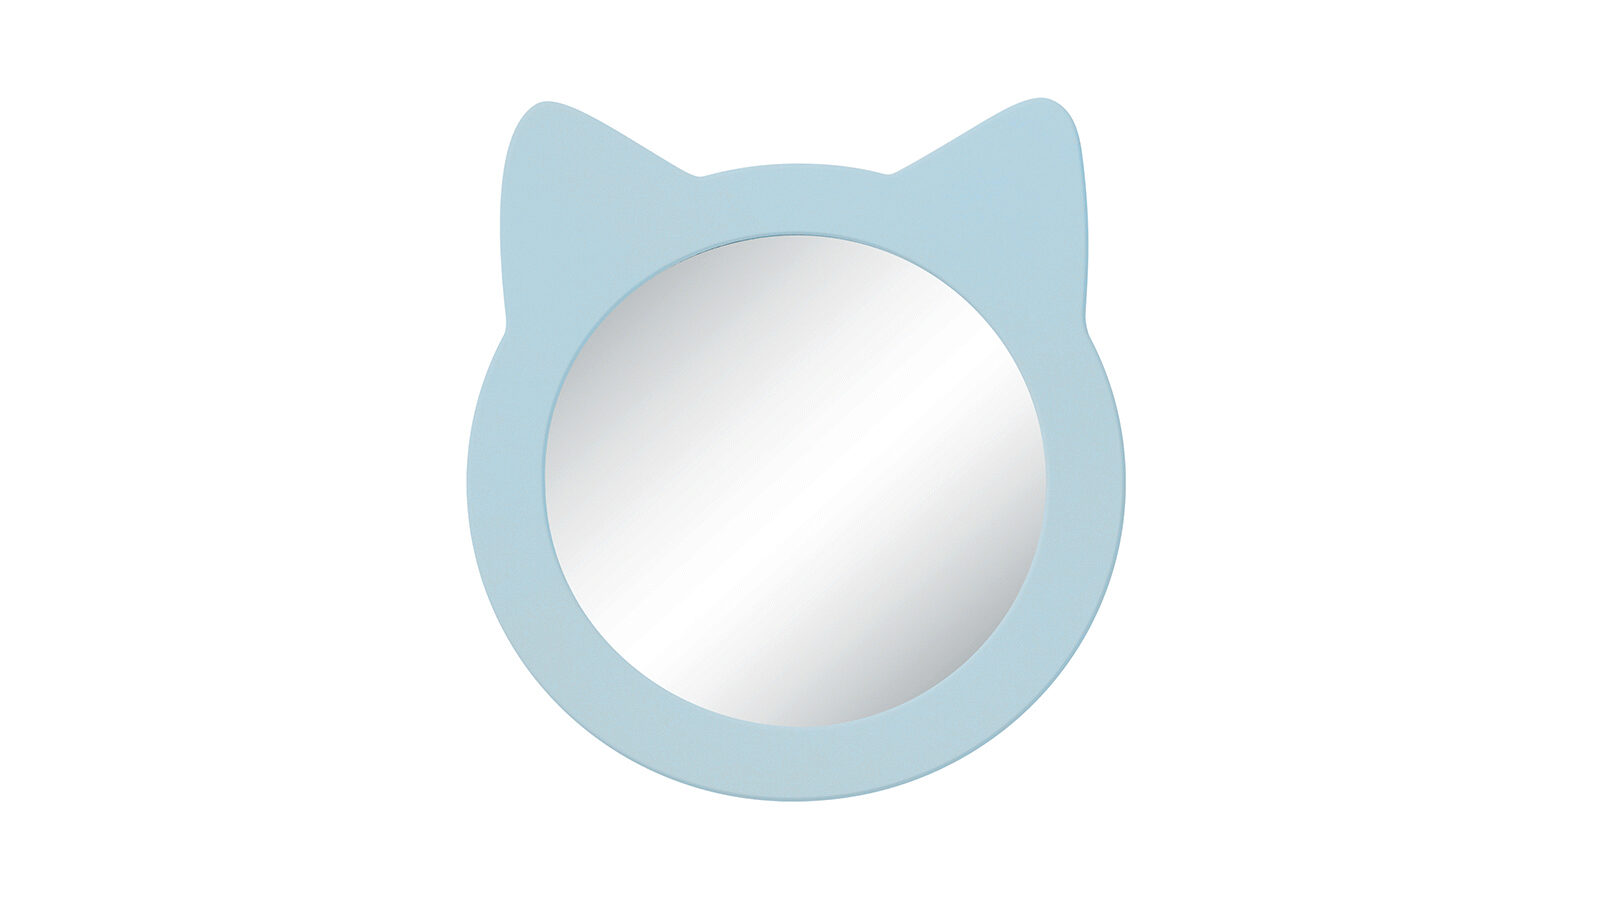 Зеркало навесное Котенок, цвет Голубой зеркало навесное котенок голубой